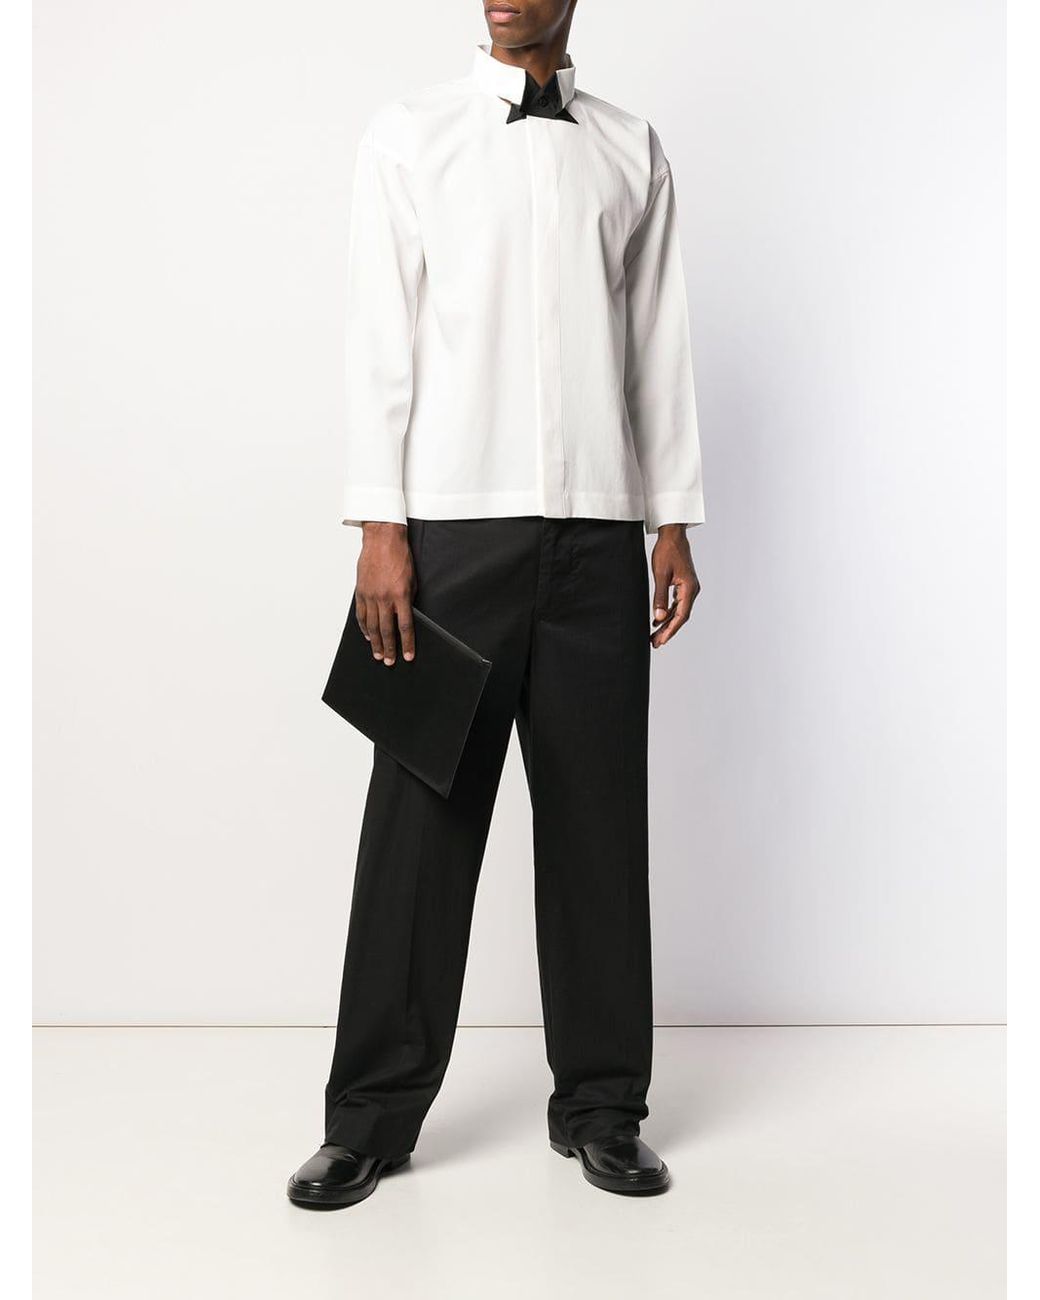 Homme Plissé Issey Miyake Men's White Tailored Tuxedo Style Shirt